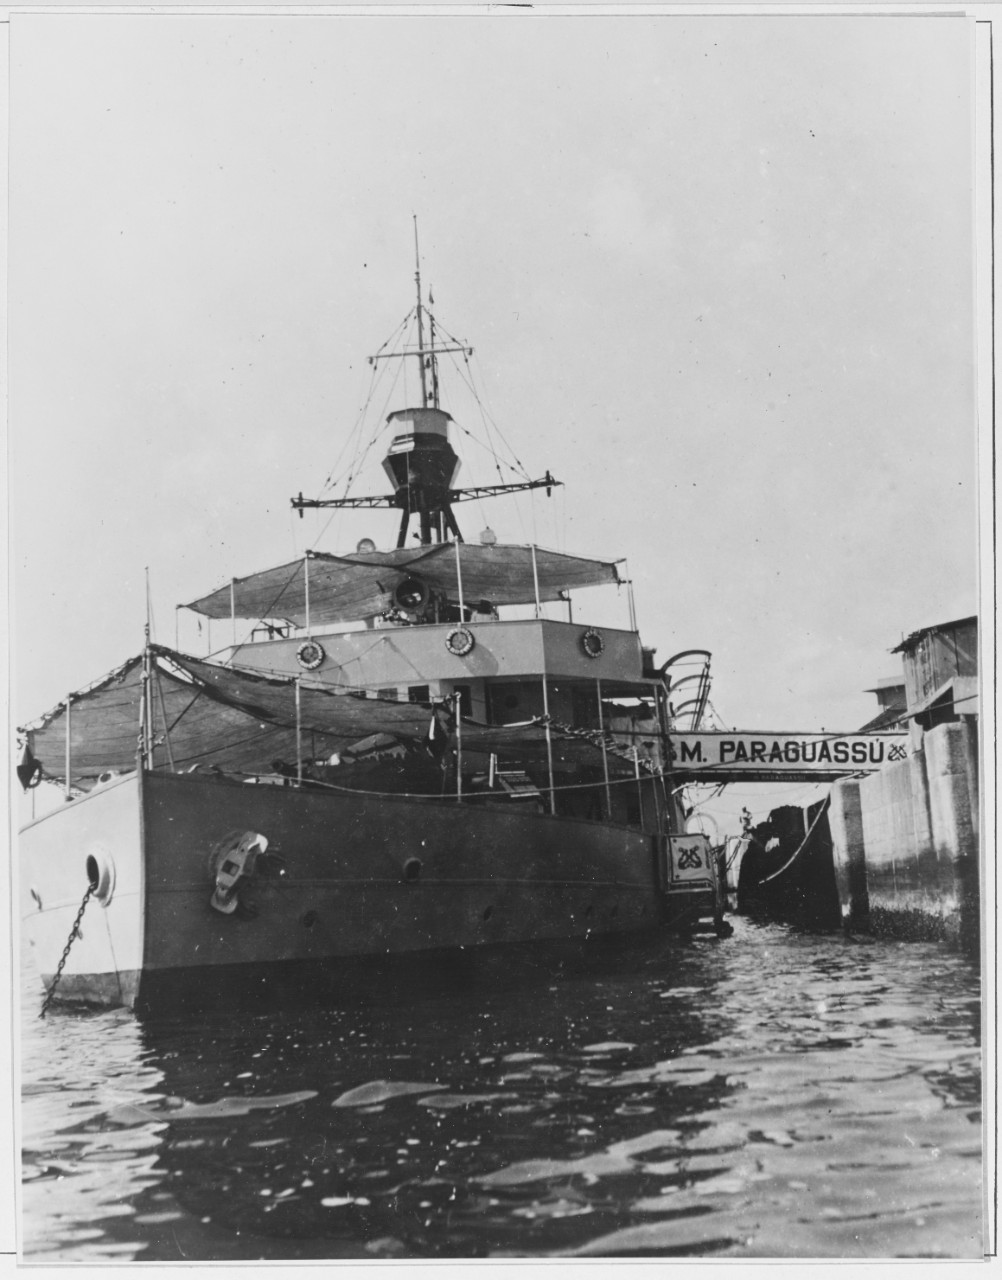 PARAGUASSU (Brazilian River Monitor, 1938)